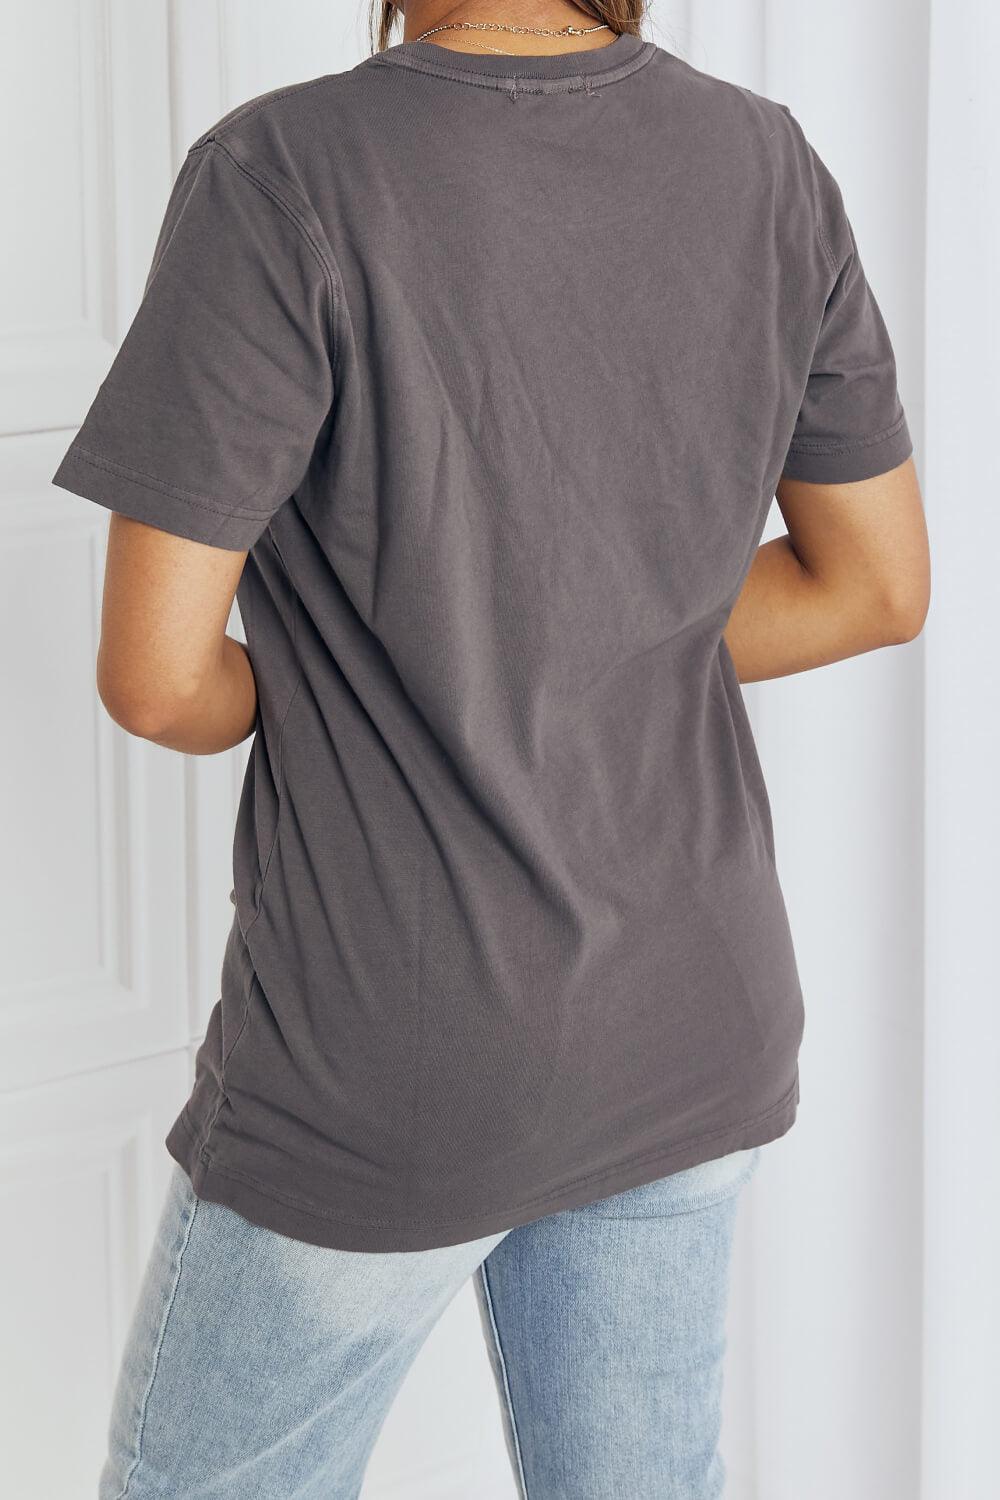 mineB Full Size Eagle Graphic Tee Shirt - Glamorous Boutique USA L.L.C.